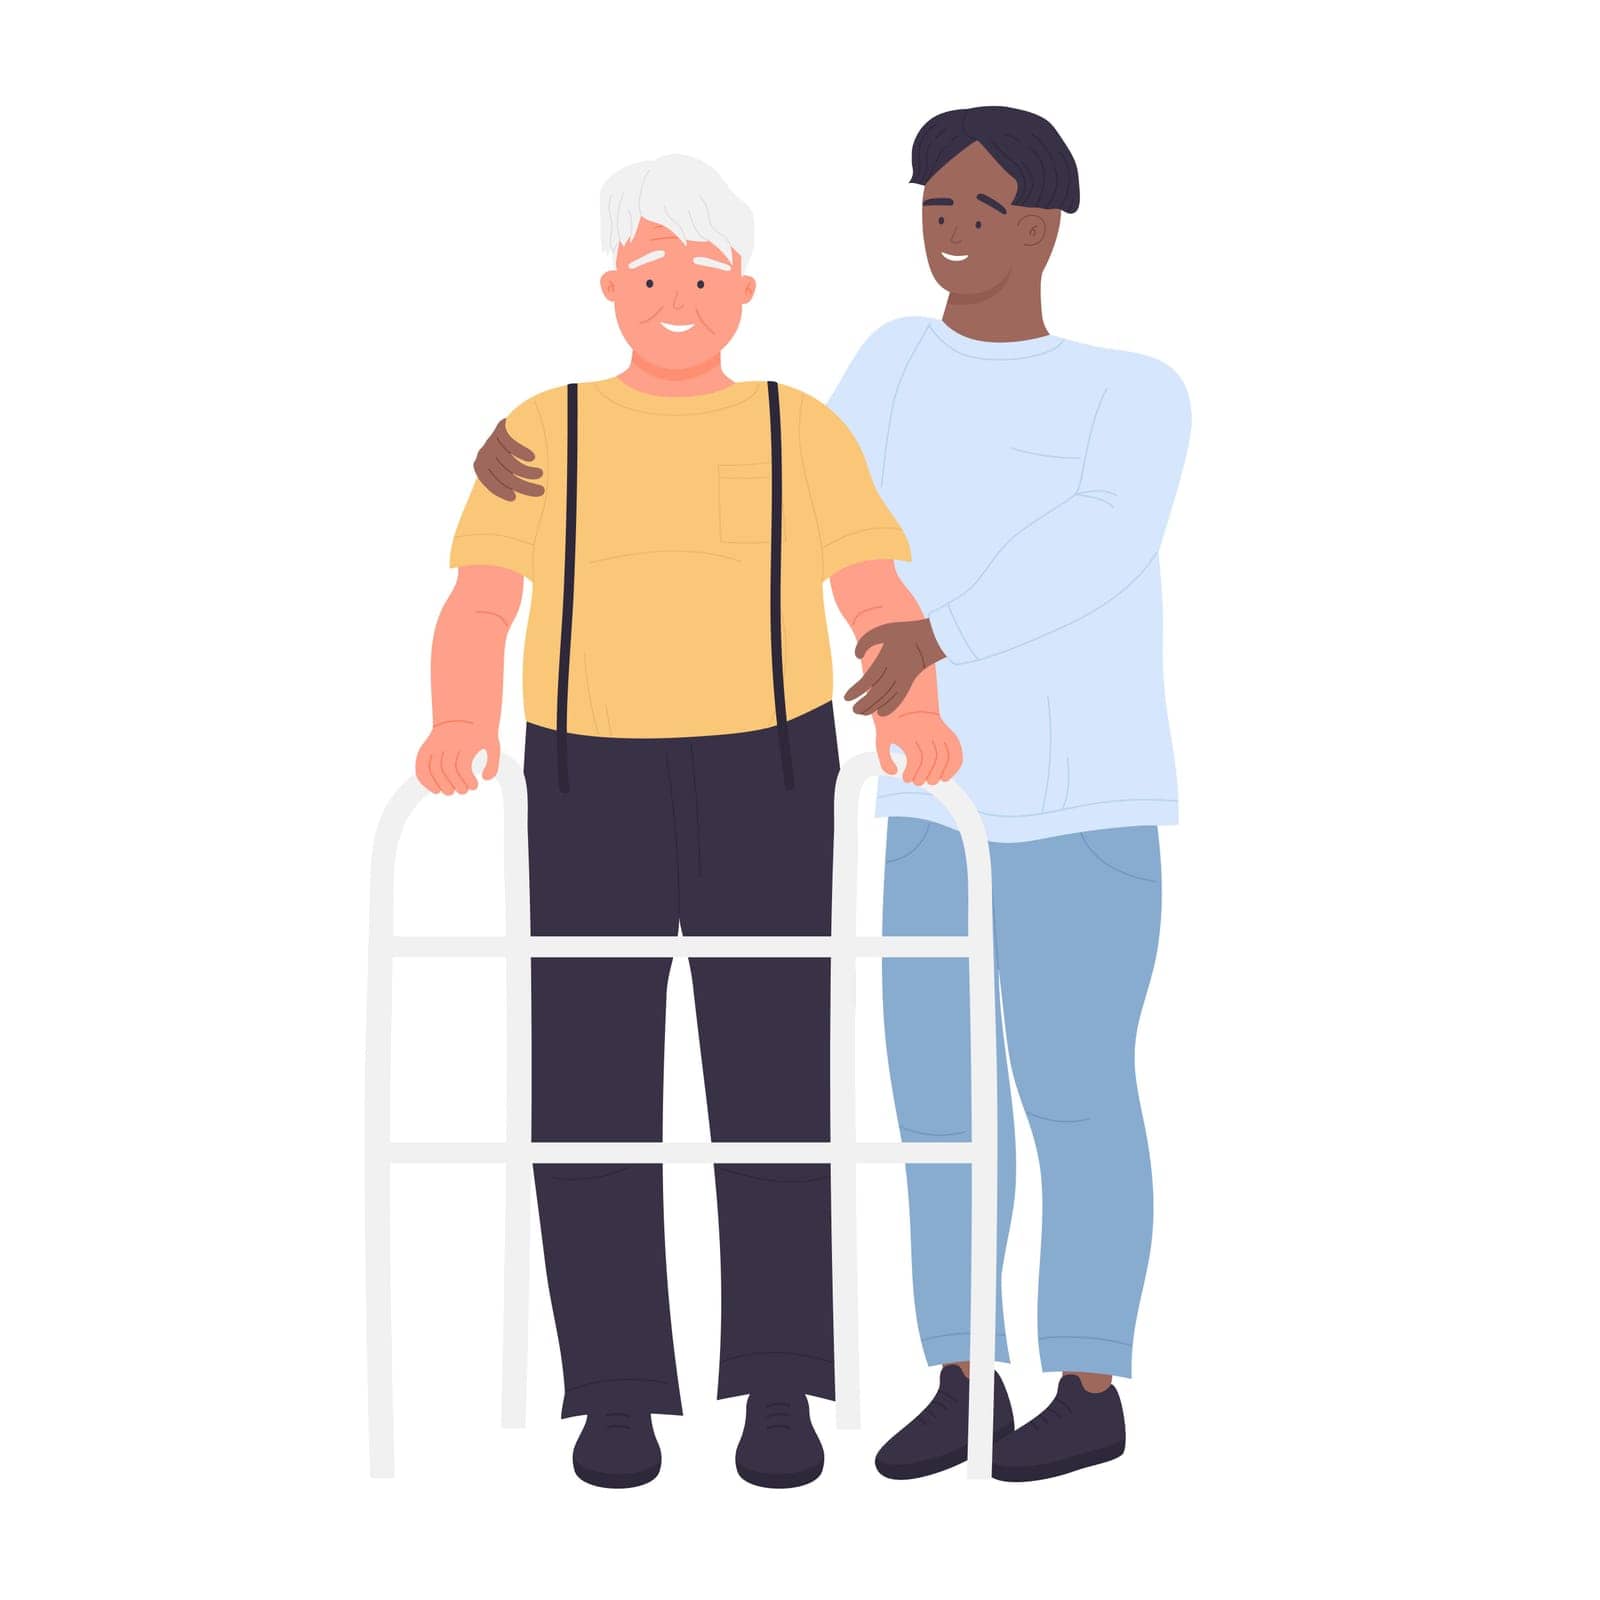 Elderly healthcare and assistance. Caregiving volunteers, seniors help vector illustration